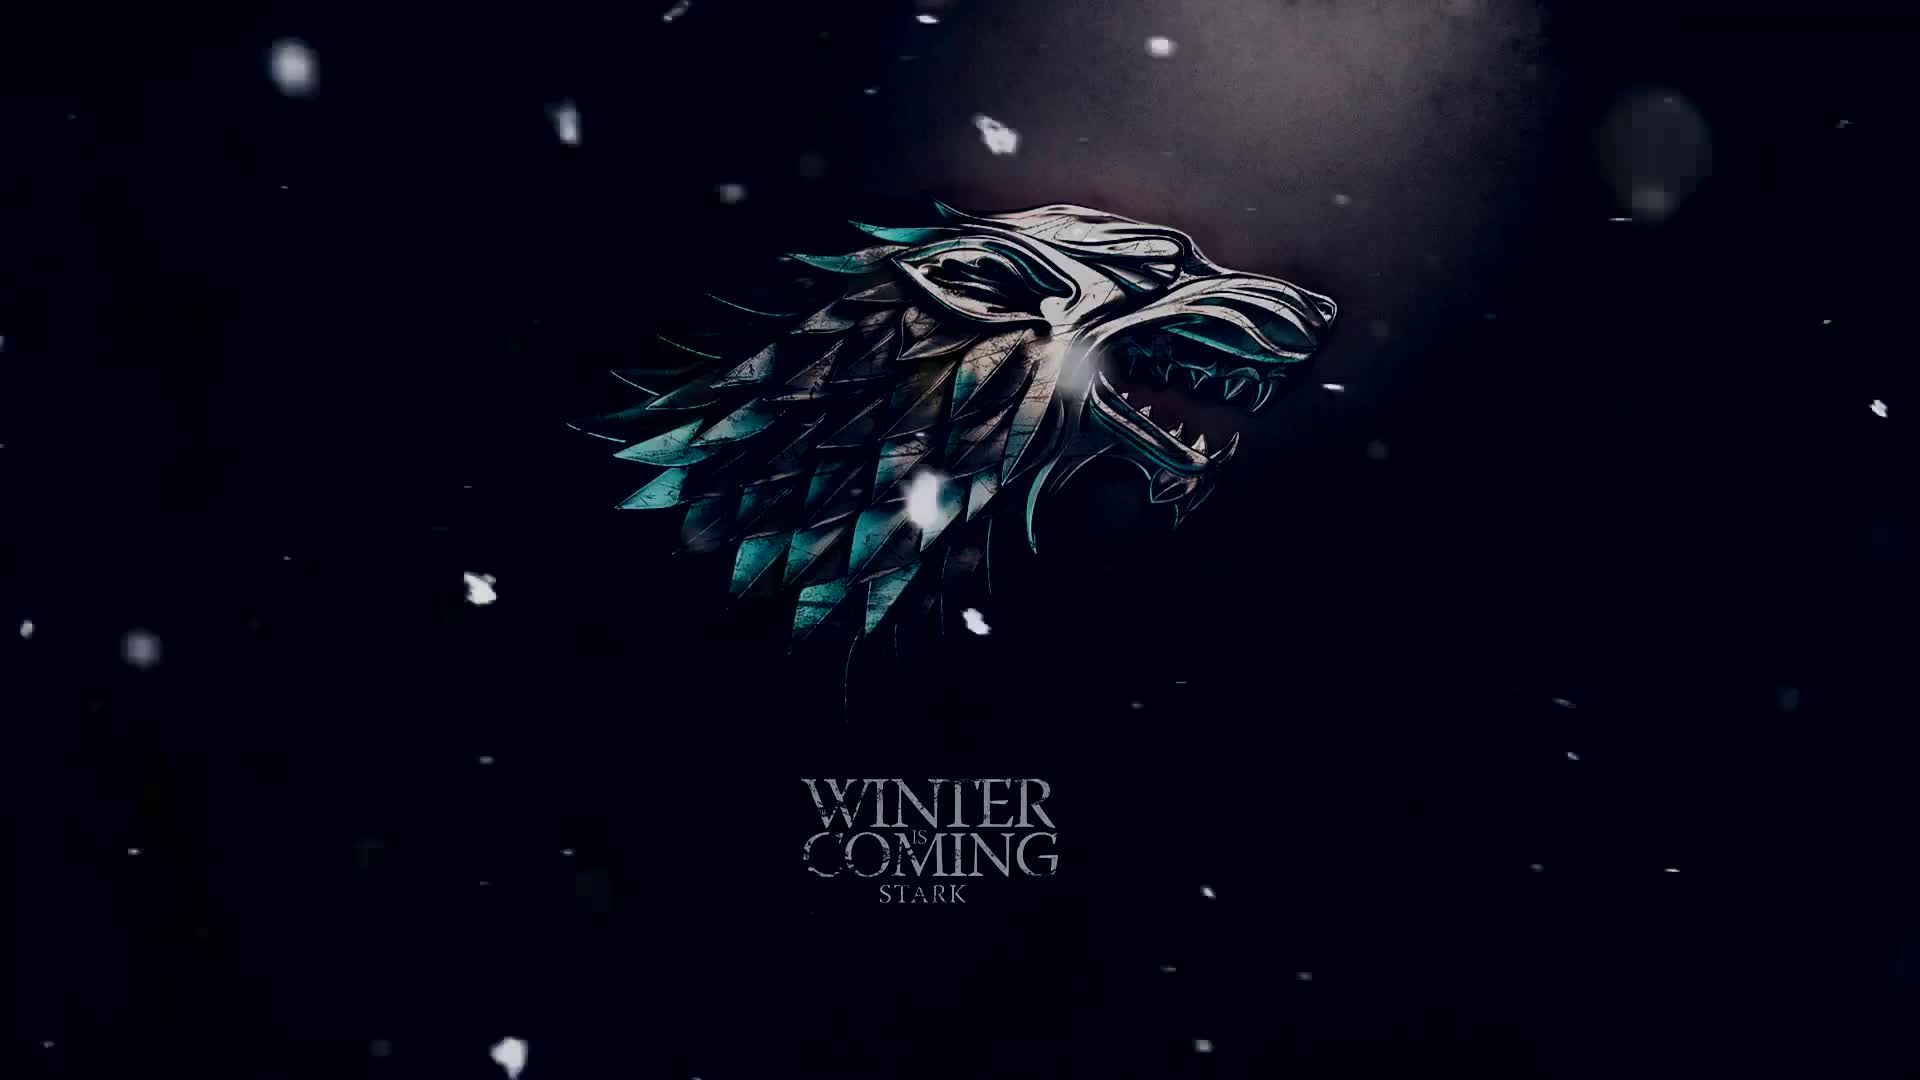 Winter Is Ing Stark Game Of Thrones Live Wallpaper Desktophut